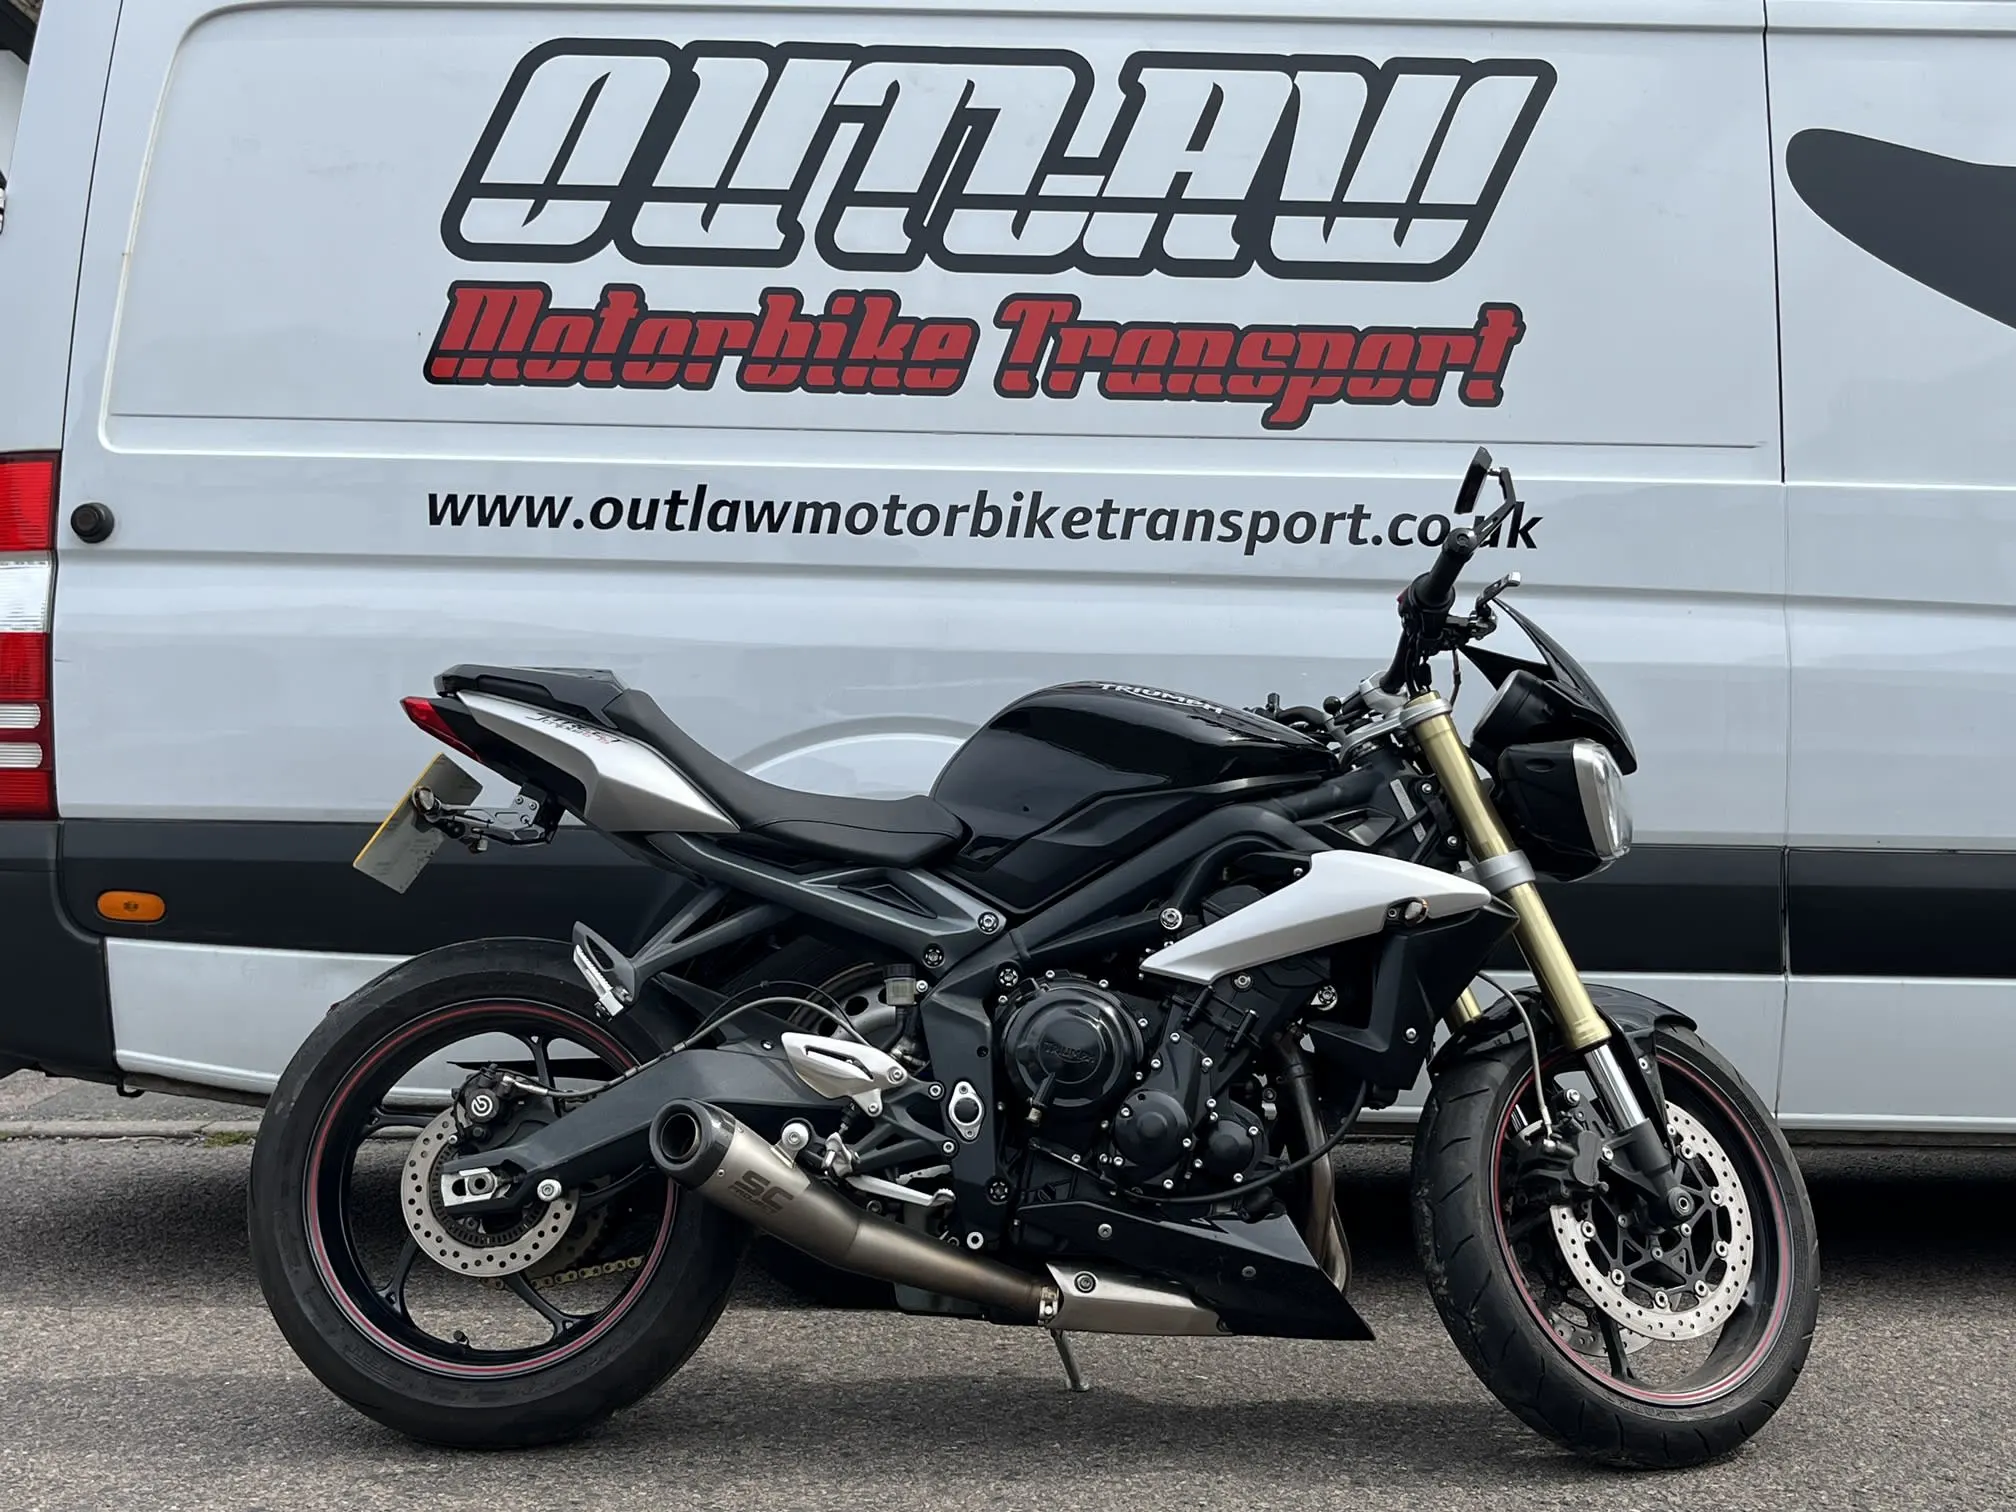 Outlaw Motorbike Transport Maidstone 07946 727325